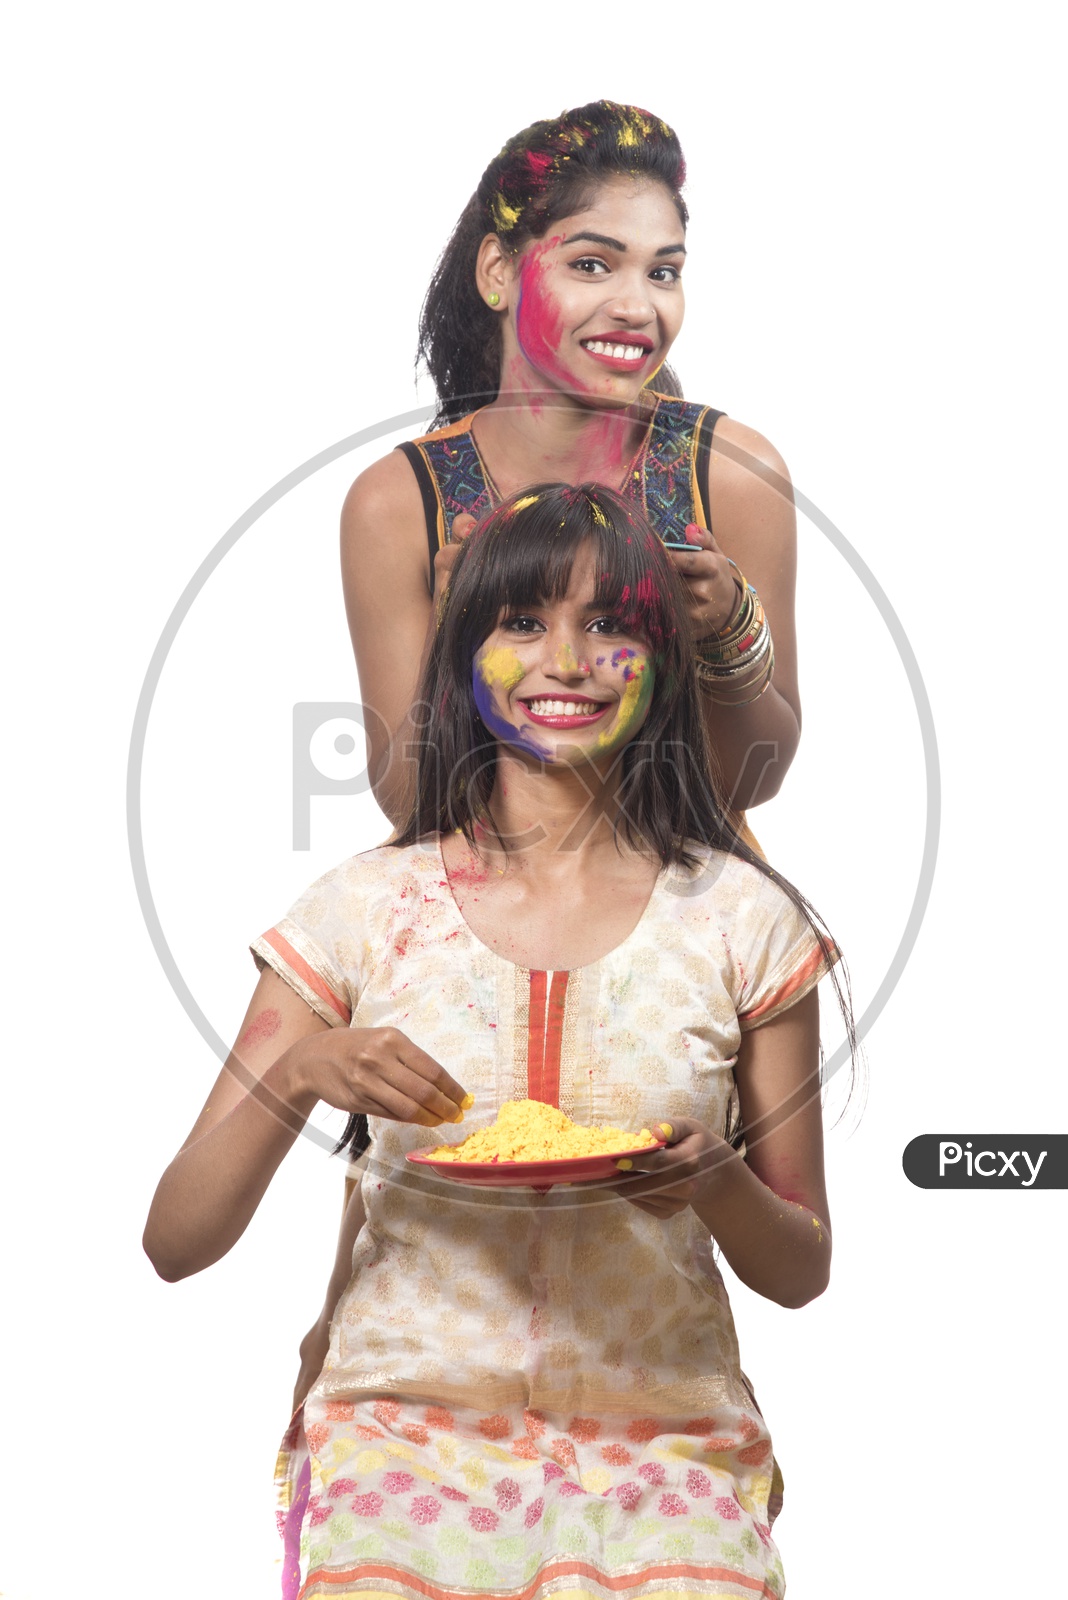 Young Indian Girls Holding Holi Color Powder Plates and Celebrating Holi